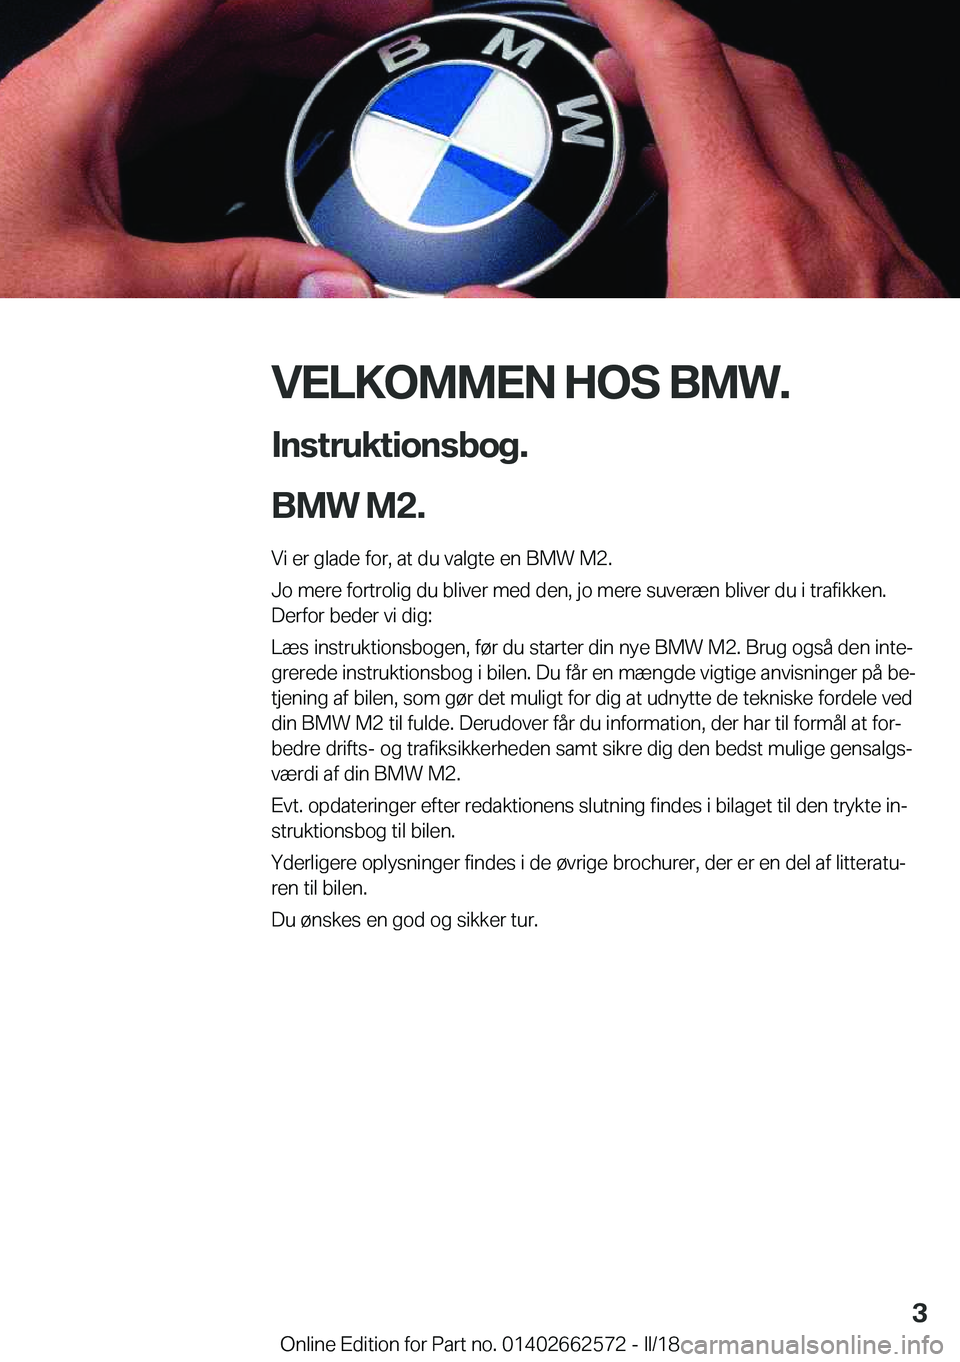 BMW M2 2018  InstruktionsbØger (in Danish) �V�E�L�K�O�M�M�E�N��H�O�S��B�M�W�.
�I�n�s�t�r�u�k�t�i�o�n�s�b�o�g�.
�B�M�W��M�2�.� �V�i� �e�r� �g�l�a�d�e� �f�o�r�,� �a�t� �d�u� �v�a�l�g�t�e� �e�n� �B�M�W� �M�2�.
�J�o� �m�e�r�e� �f�o�r�t�r�o�l�i